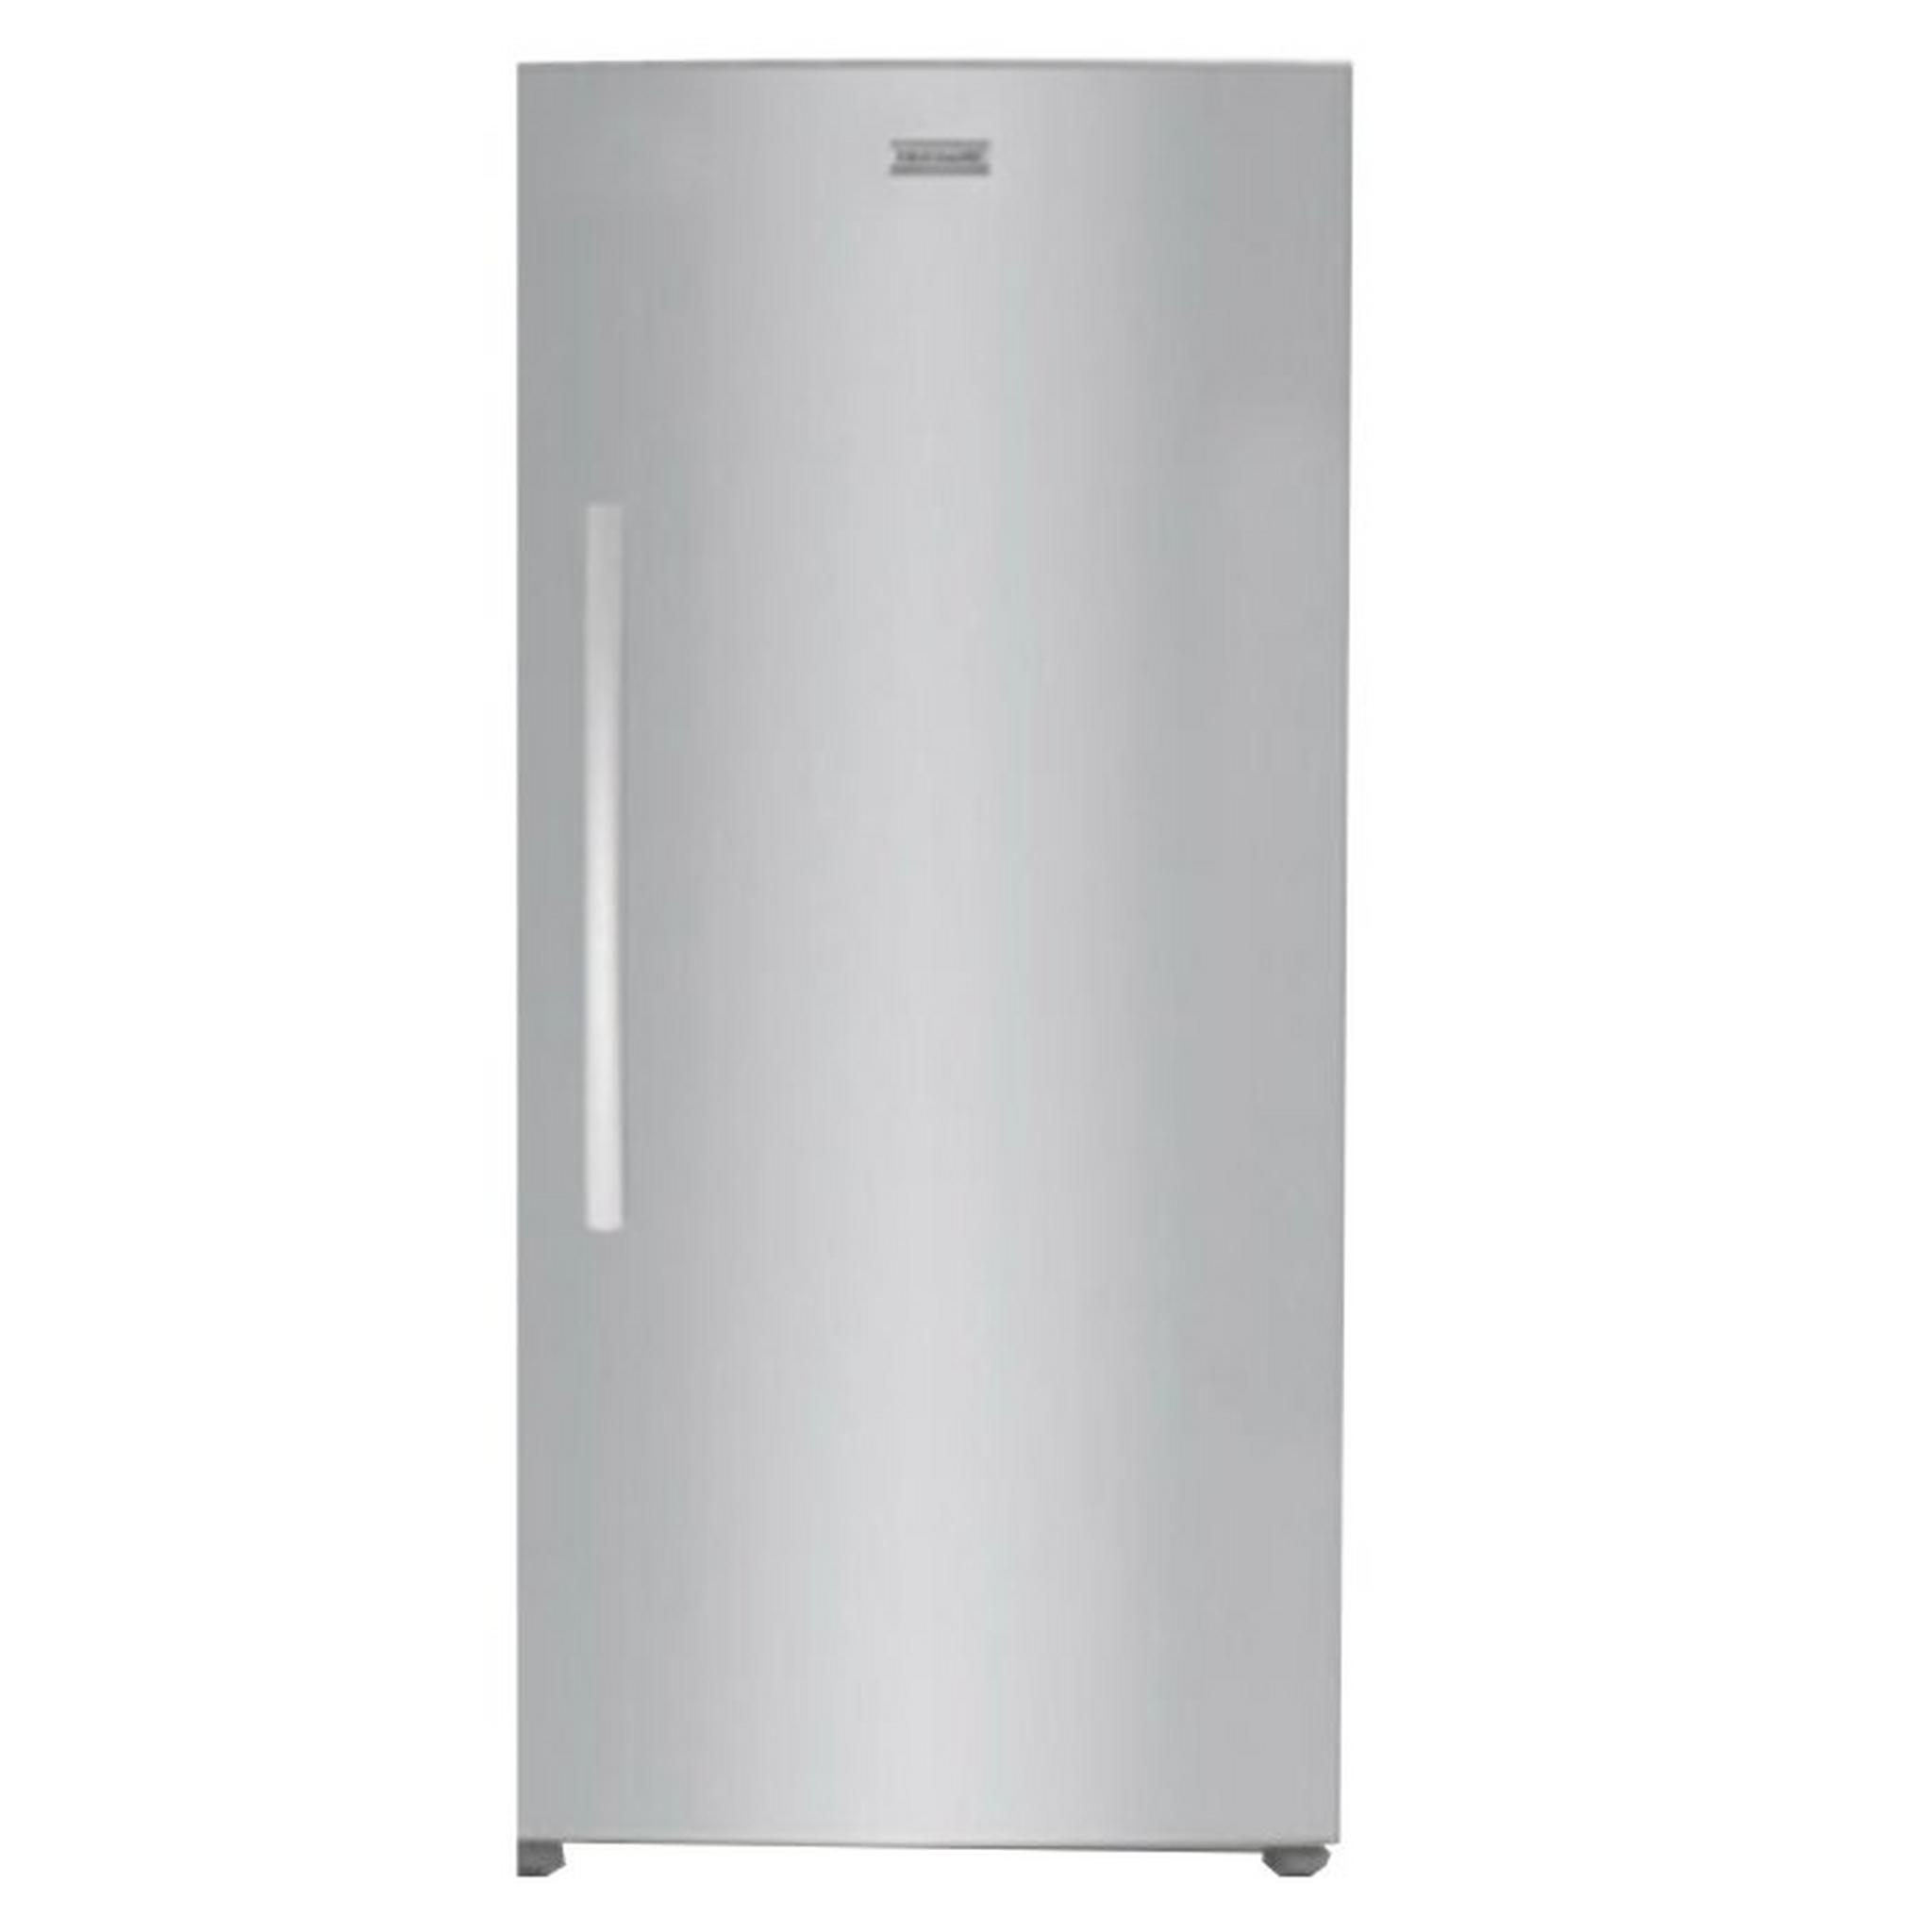 Frigidaire Refrigerator Single Door 20 Cft + Frigidaire 90x60 5-Burner Gas Cooker